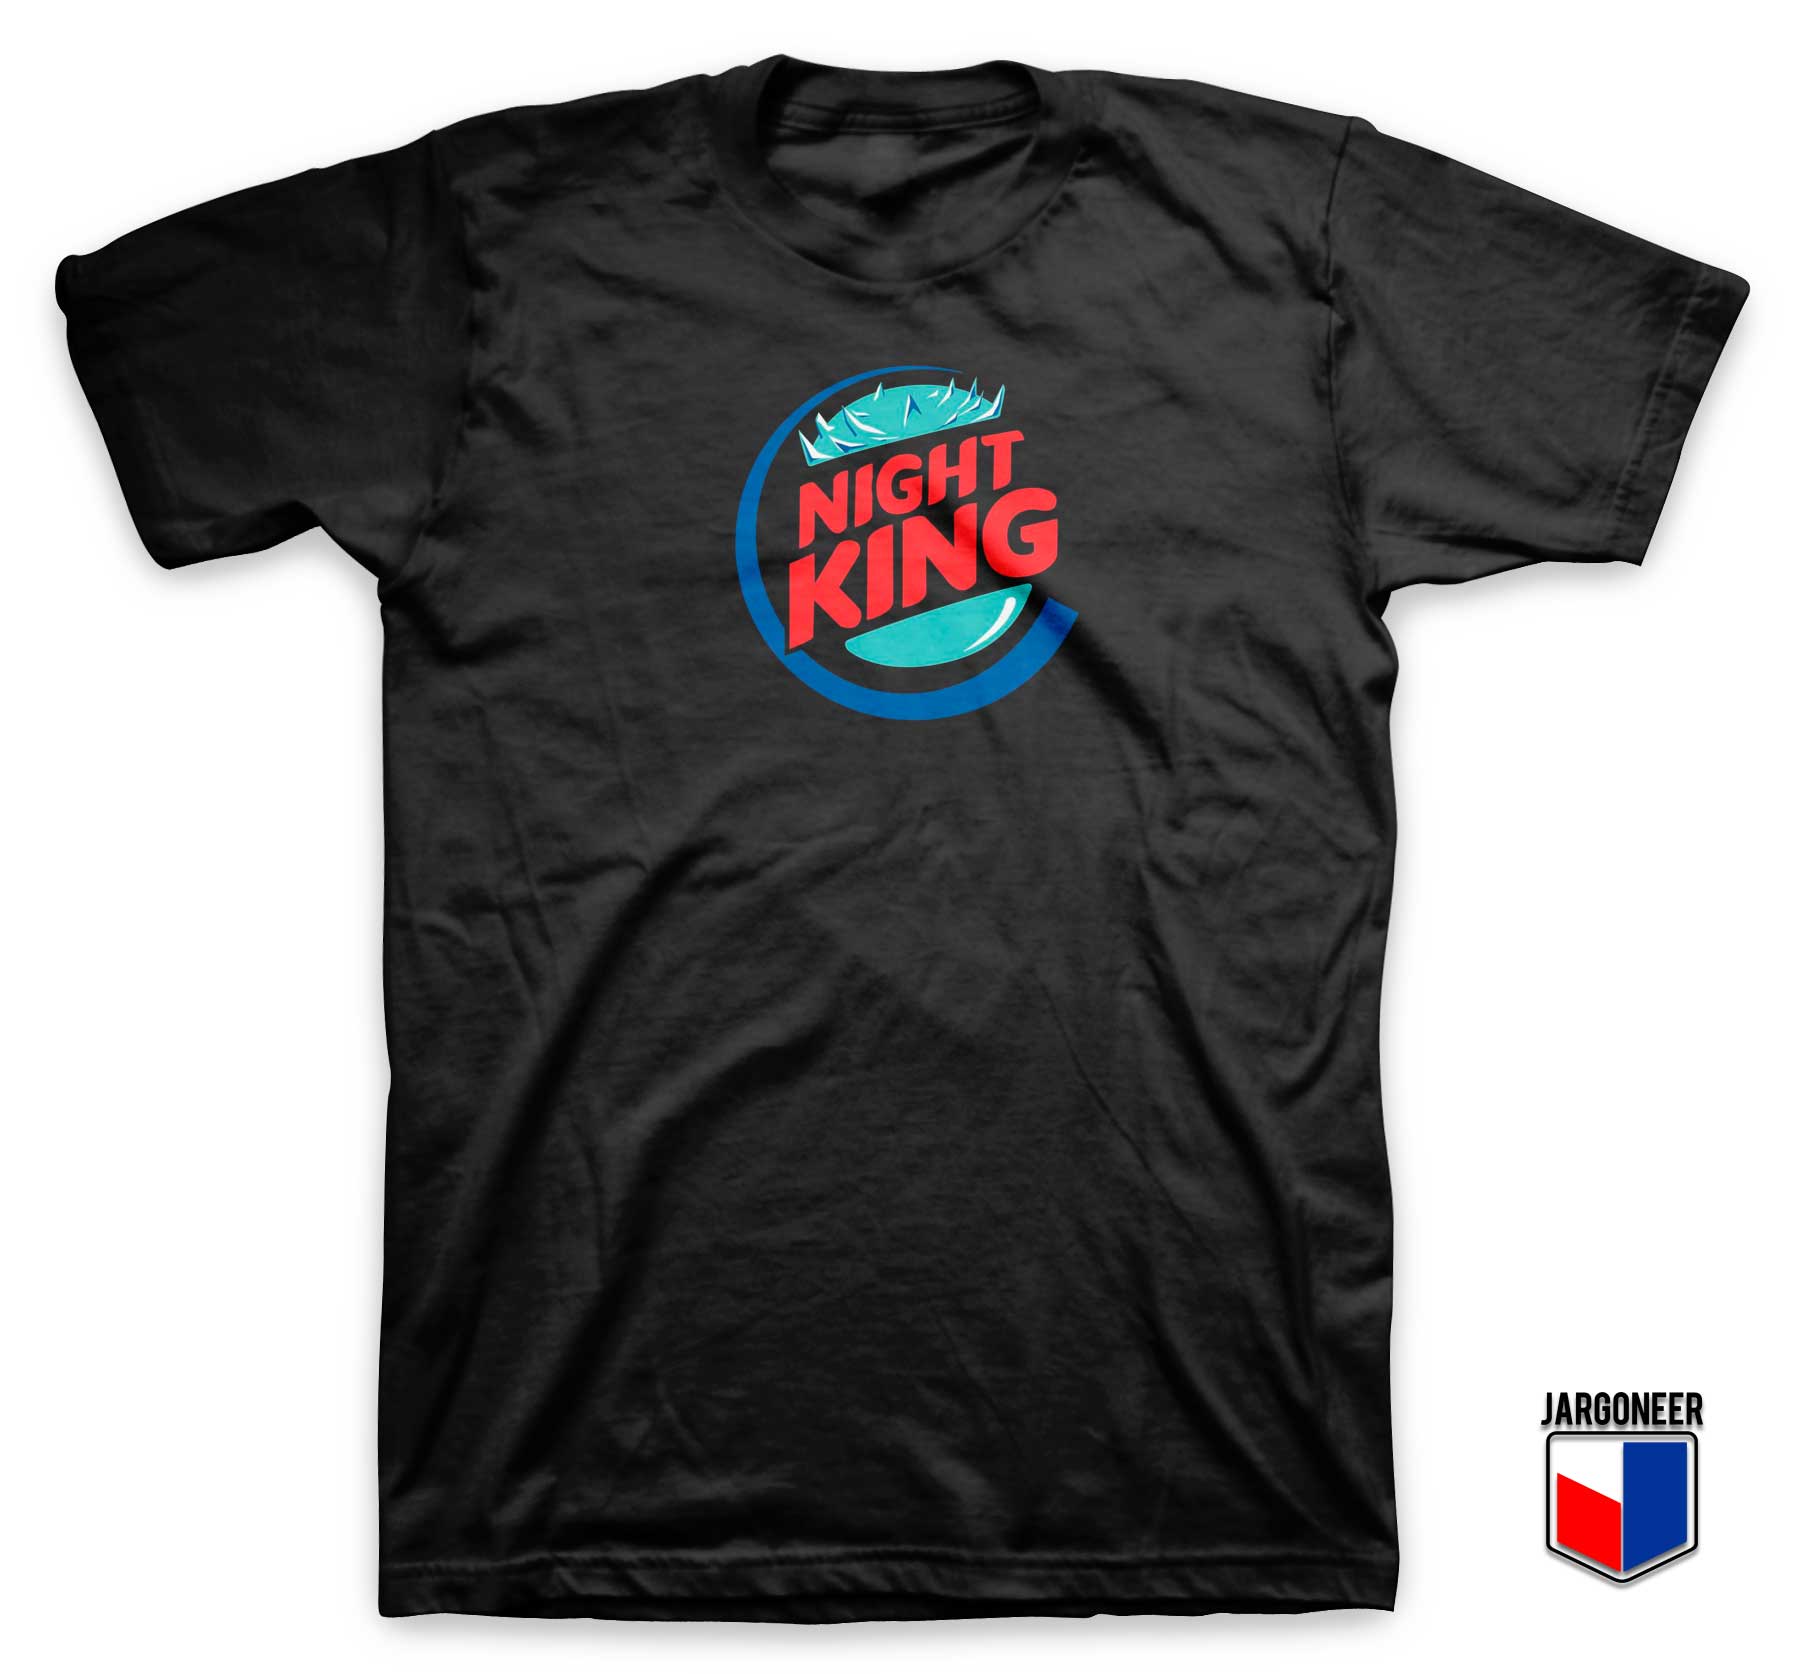 Night King Logo Parody T Shirt - Shop Unique Graphic Cool Shirt Designs